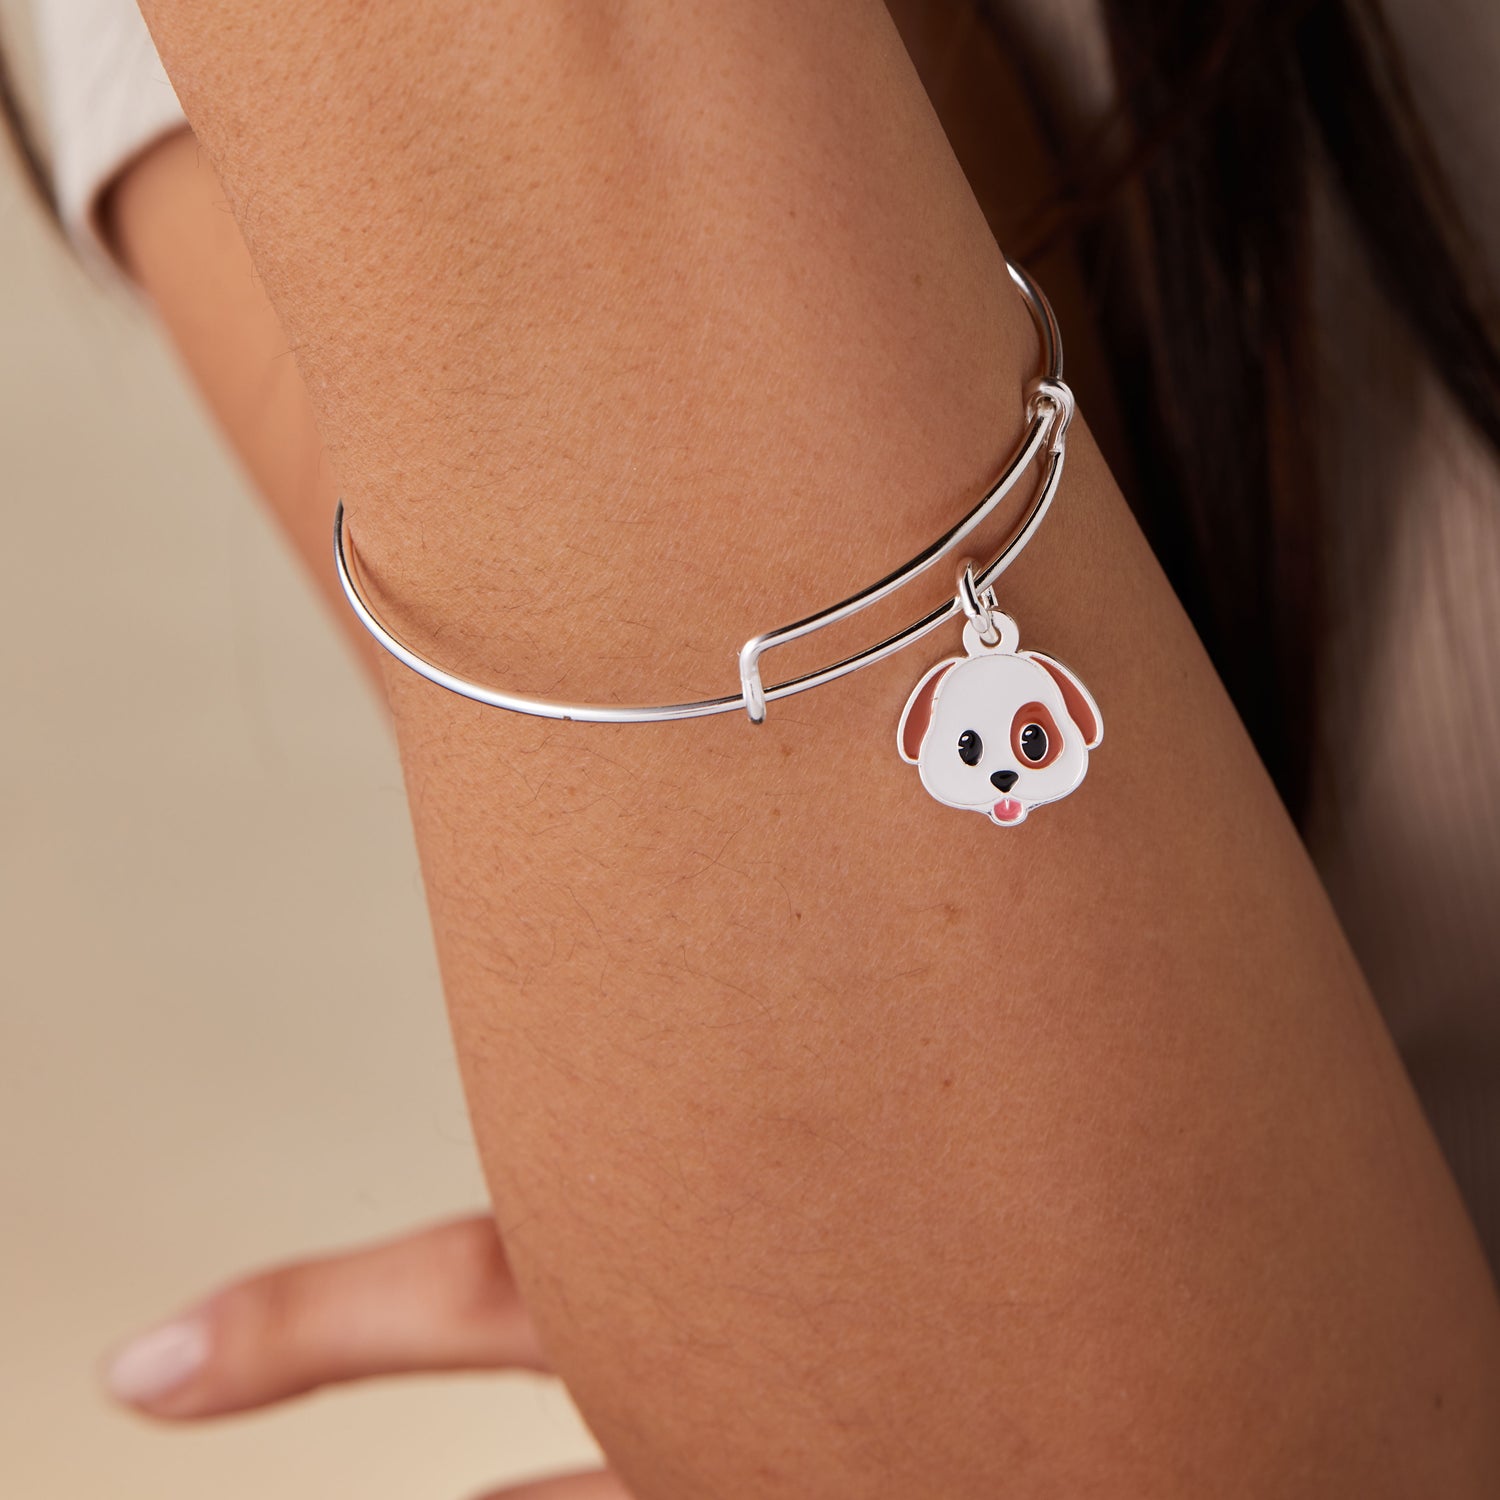 Dog Emoji Charm Bangle Bracelet